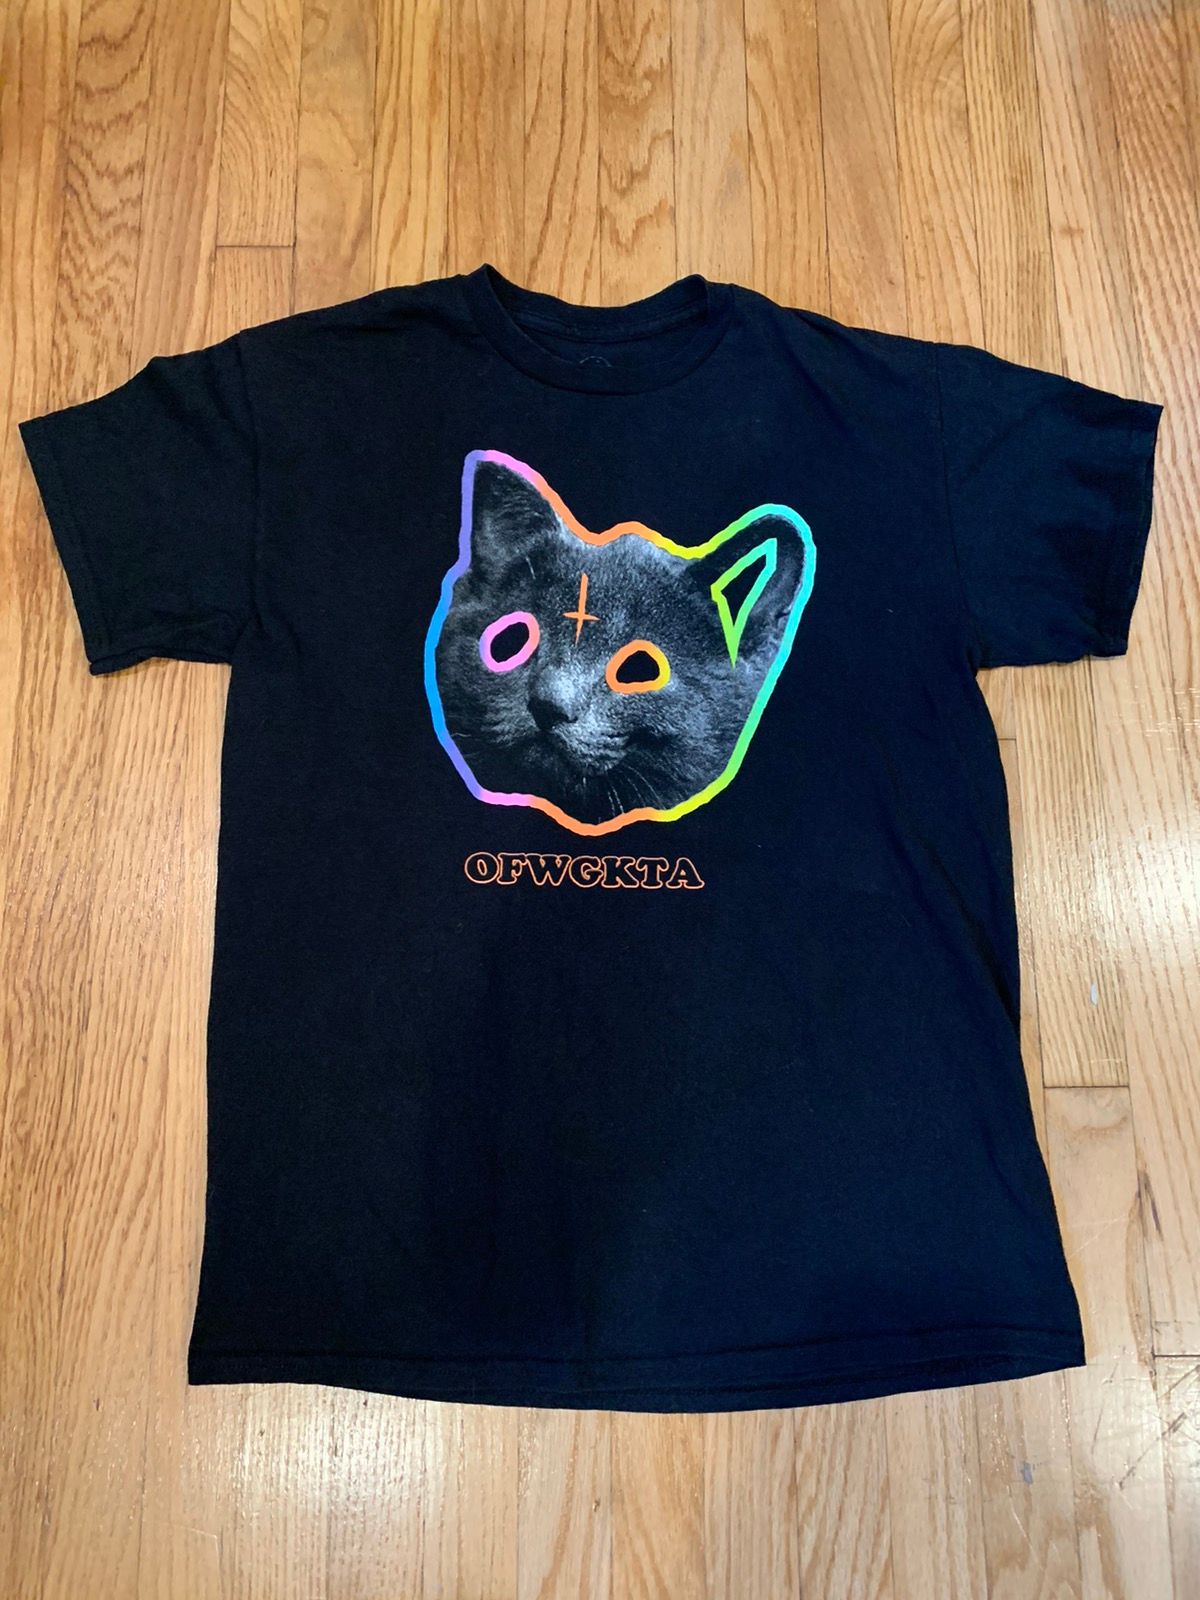 Odd Future OFWGKTA Tron Cat Tyler The Creator T-Shirt | Grailed